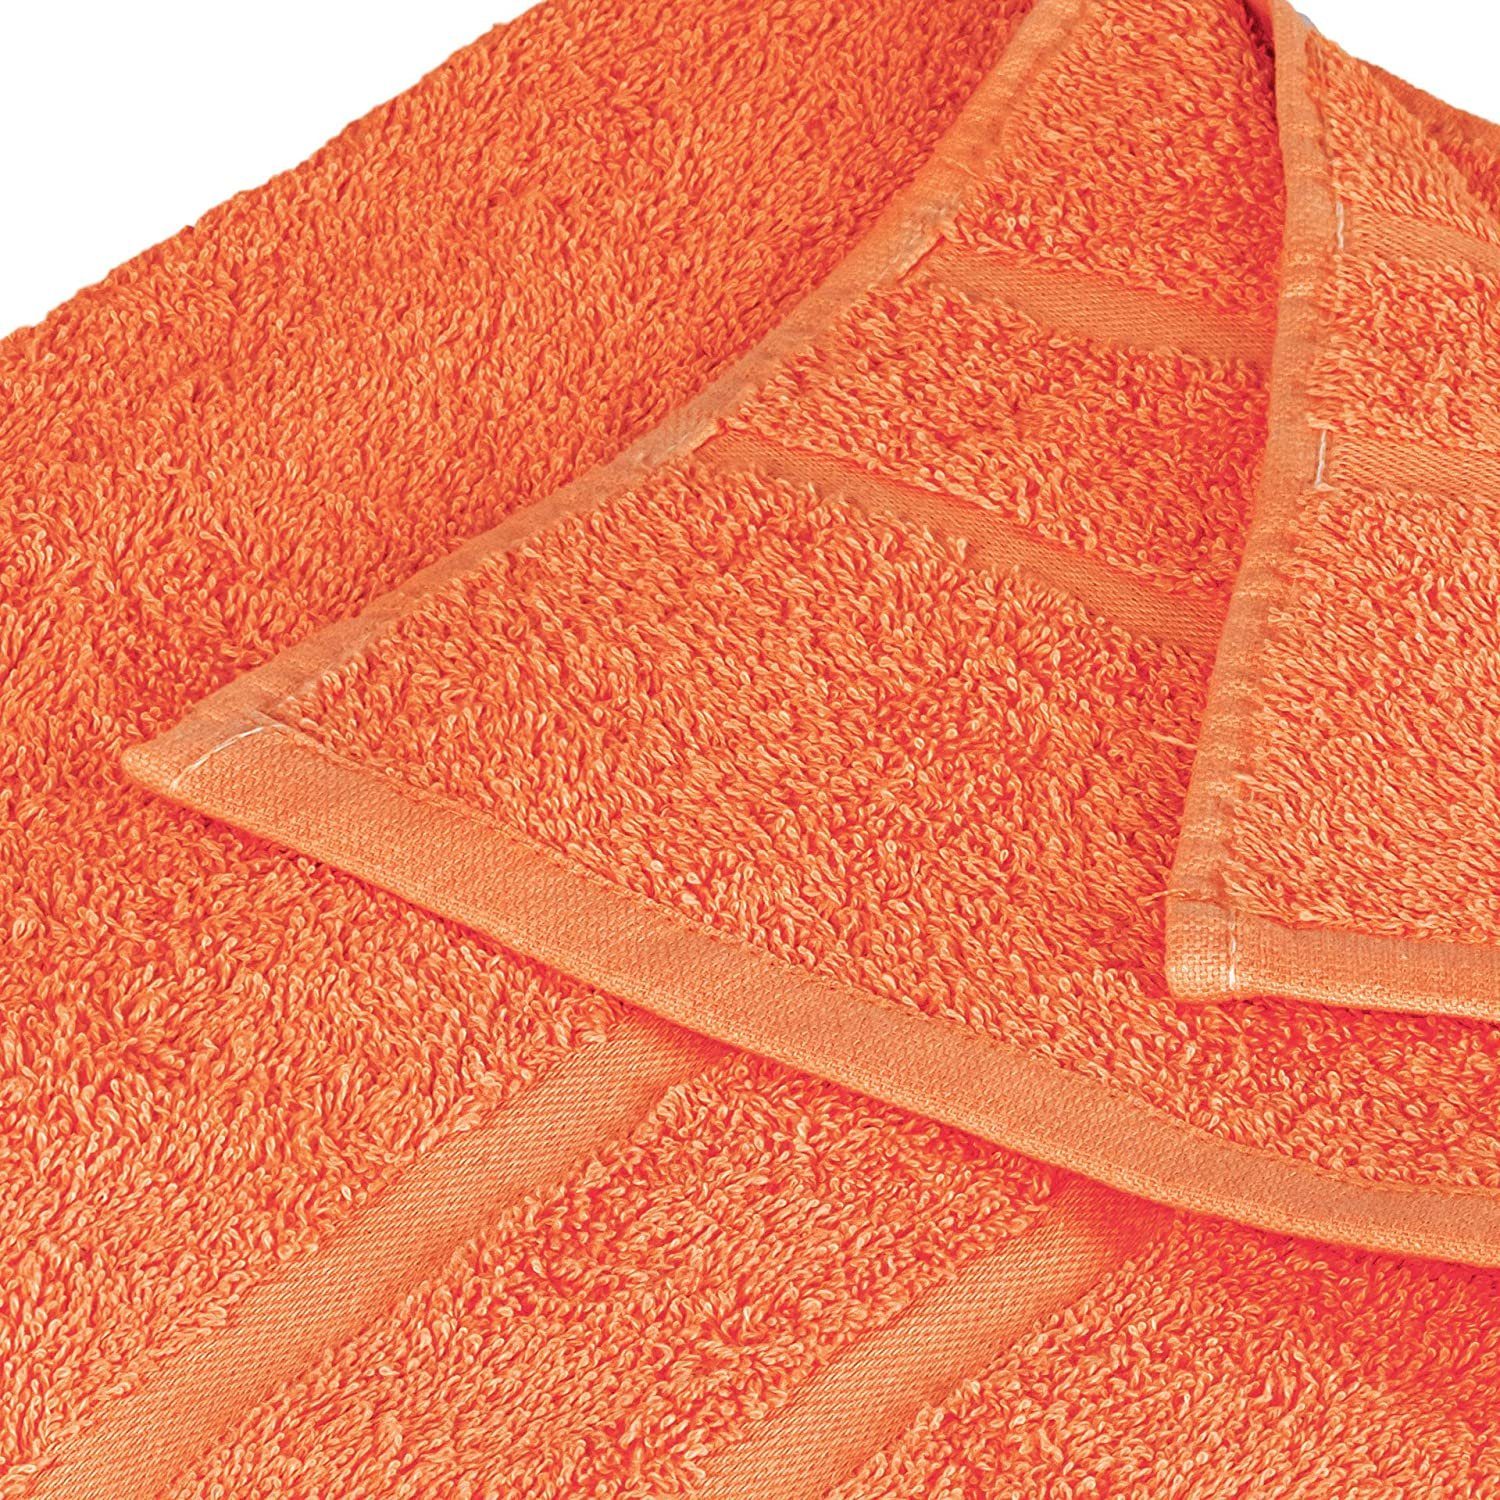 2x 2x 2x 8er Frottee Handtuch 500 Handtuch GSM verschiedenen Pack, Duschtücher Orange in als 500 Baumwolle Teilig) Handtücher Gästehandtuch (8 Baumwolle 2x Farben Badetücher SET GSM Set 100% StickandShine 100%